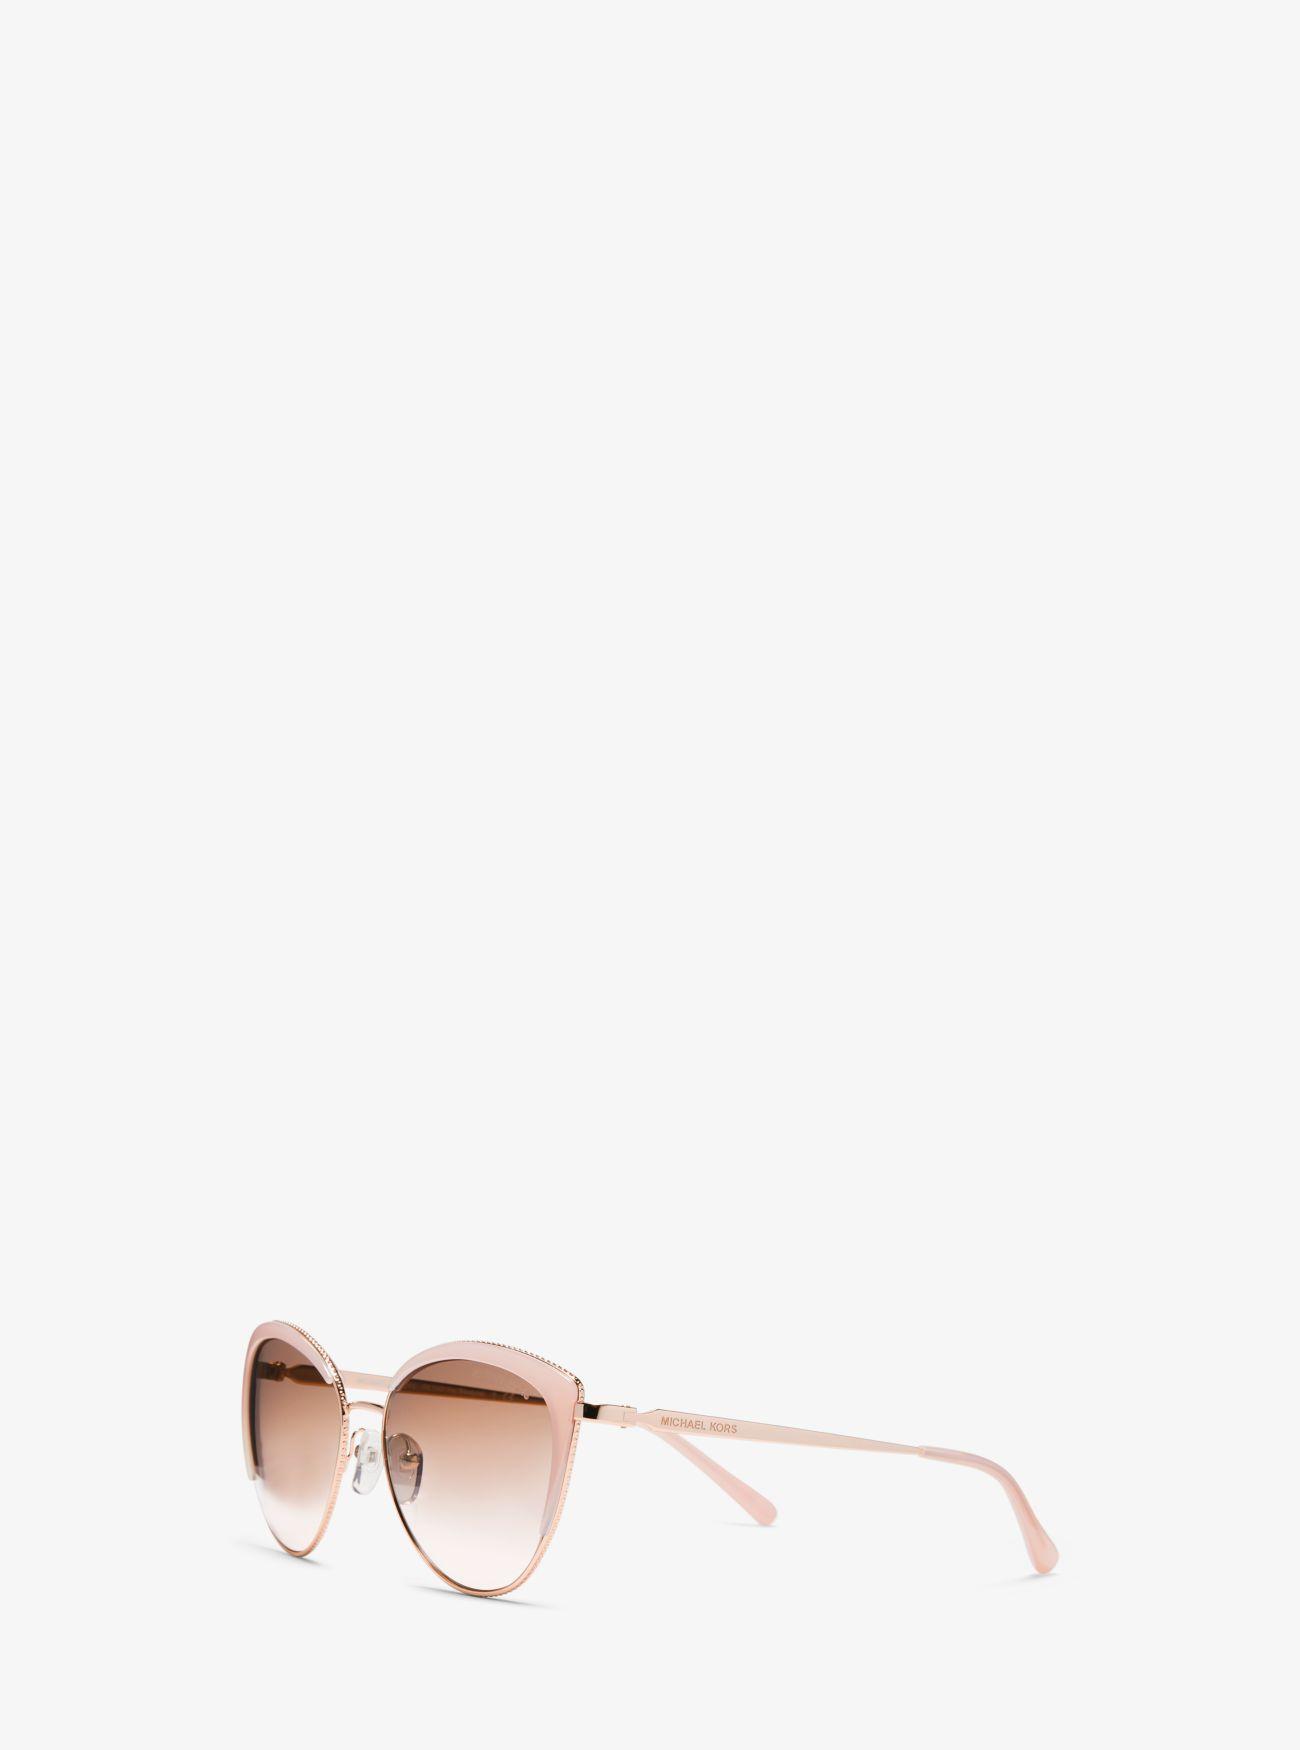 Michael Kors Key Biscayne Sunglasses In Pink Lyst